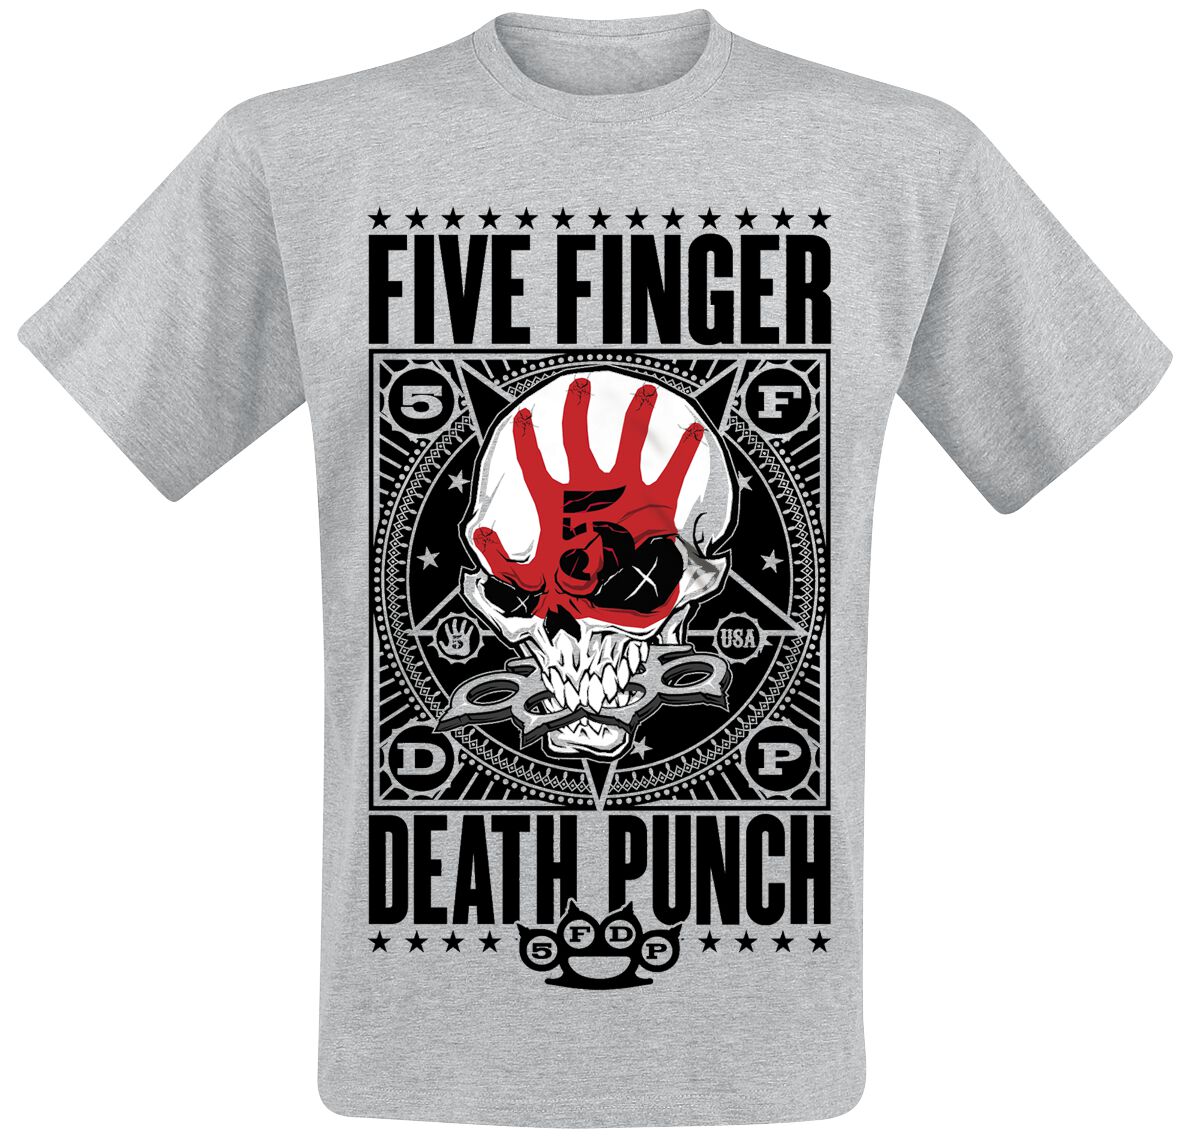 Image of Five Finger Death Punch Punchagram T-Shirt grau meliert